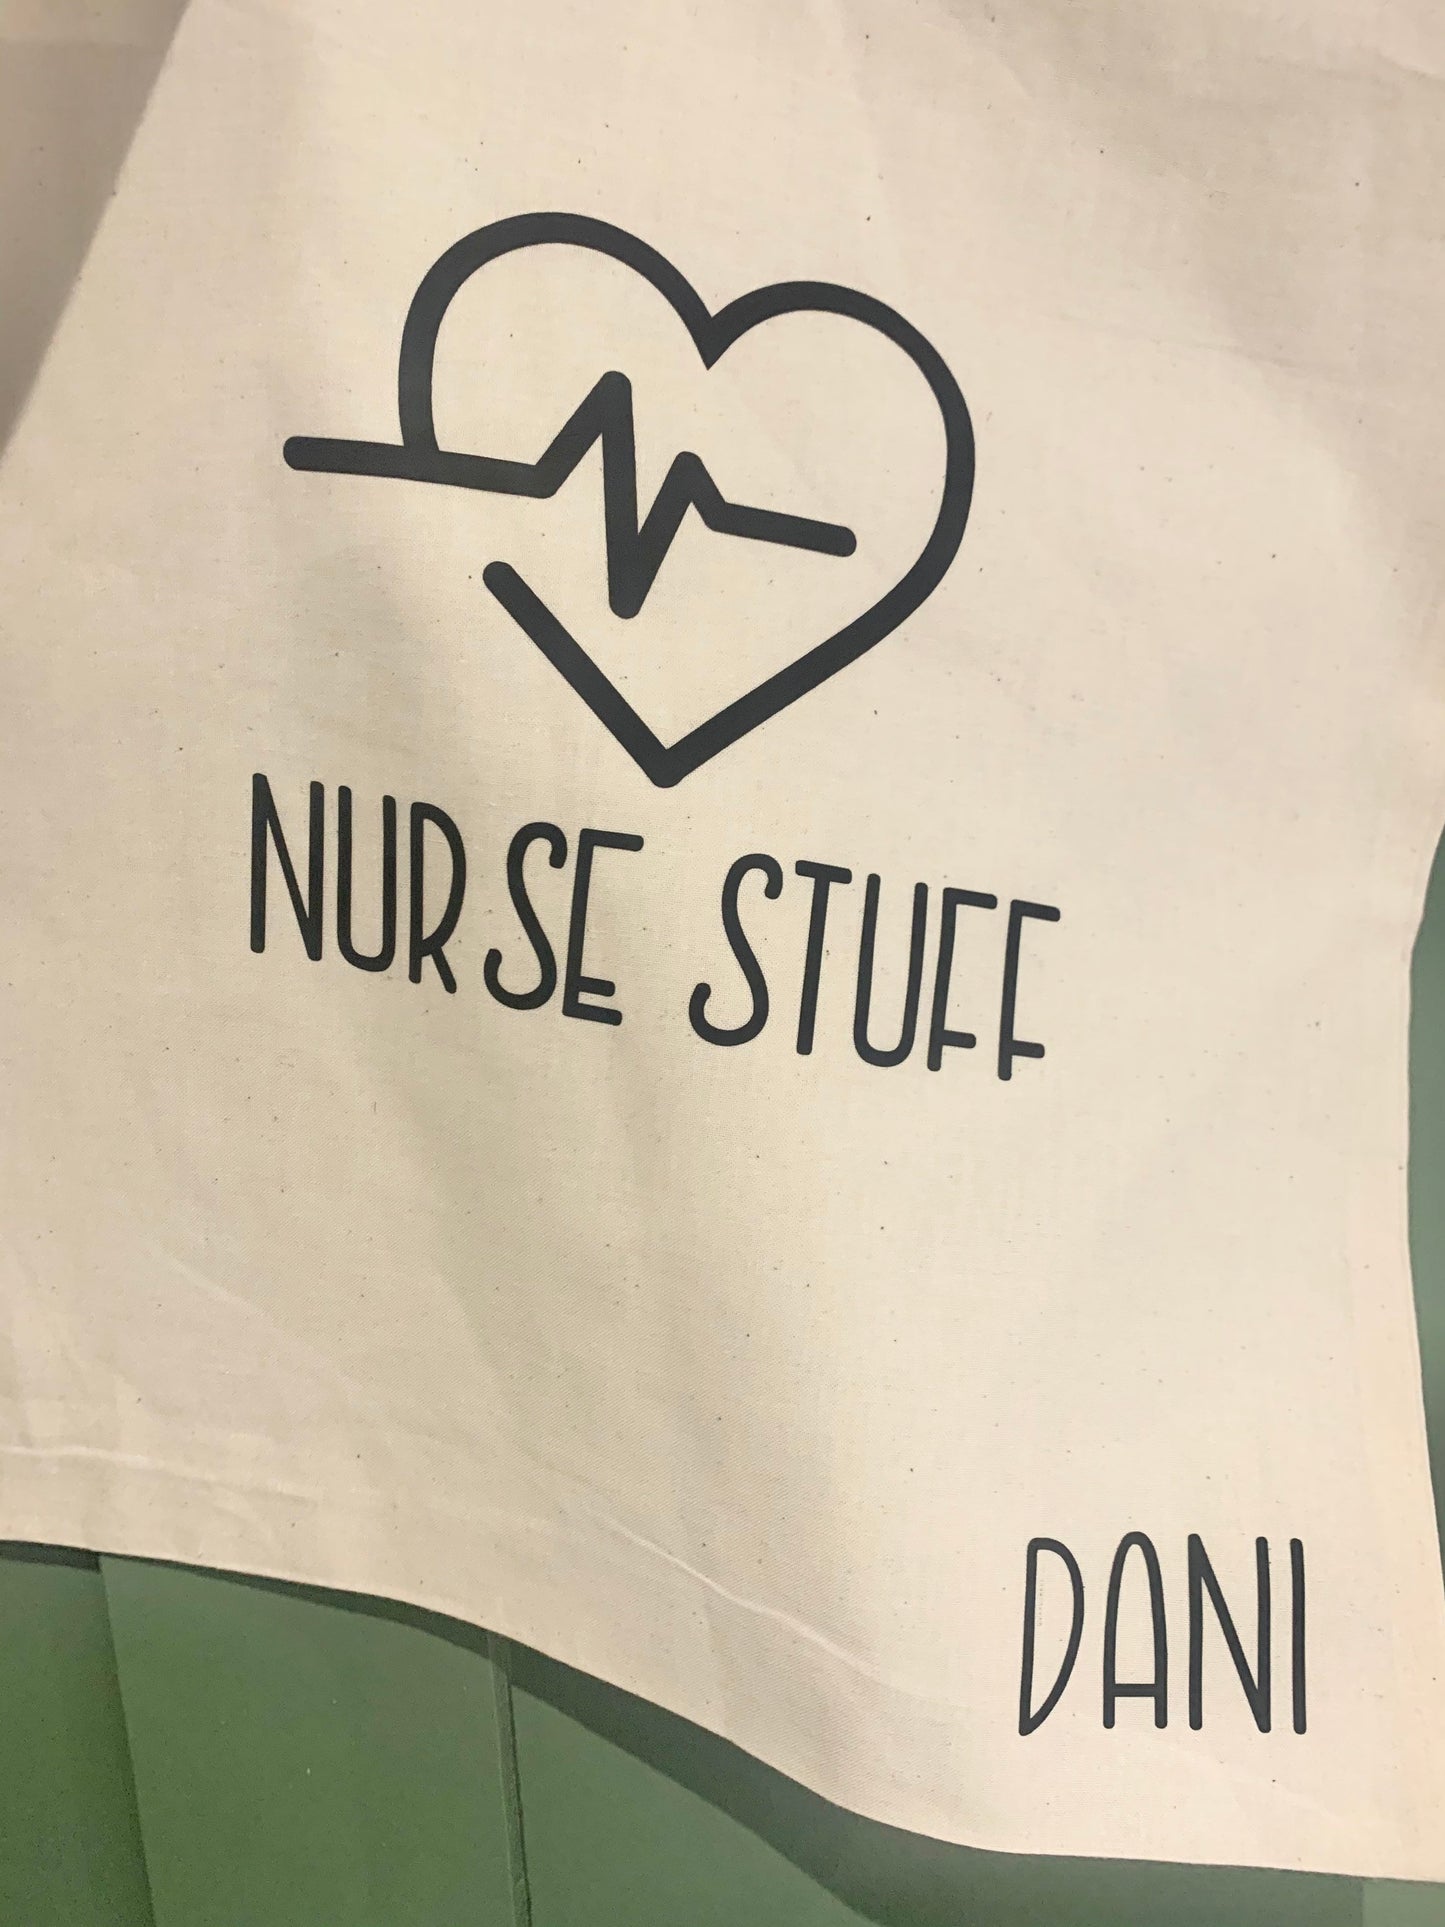 Nurse stuff tote Bag, cotton shopper bag, congrats first nursing job gift, nhs nurse gift, nurse colleague leaving gift